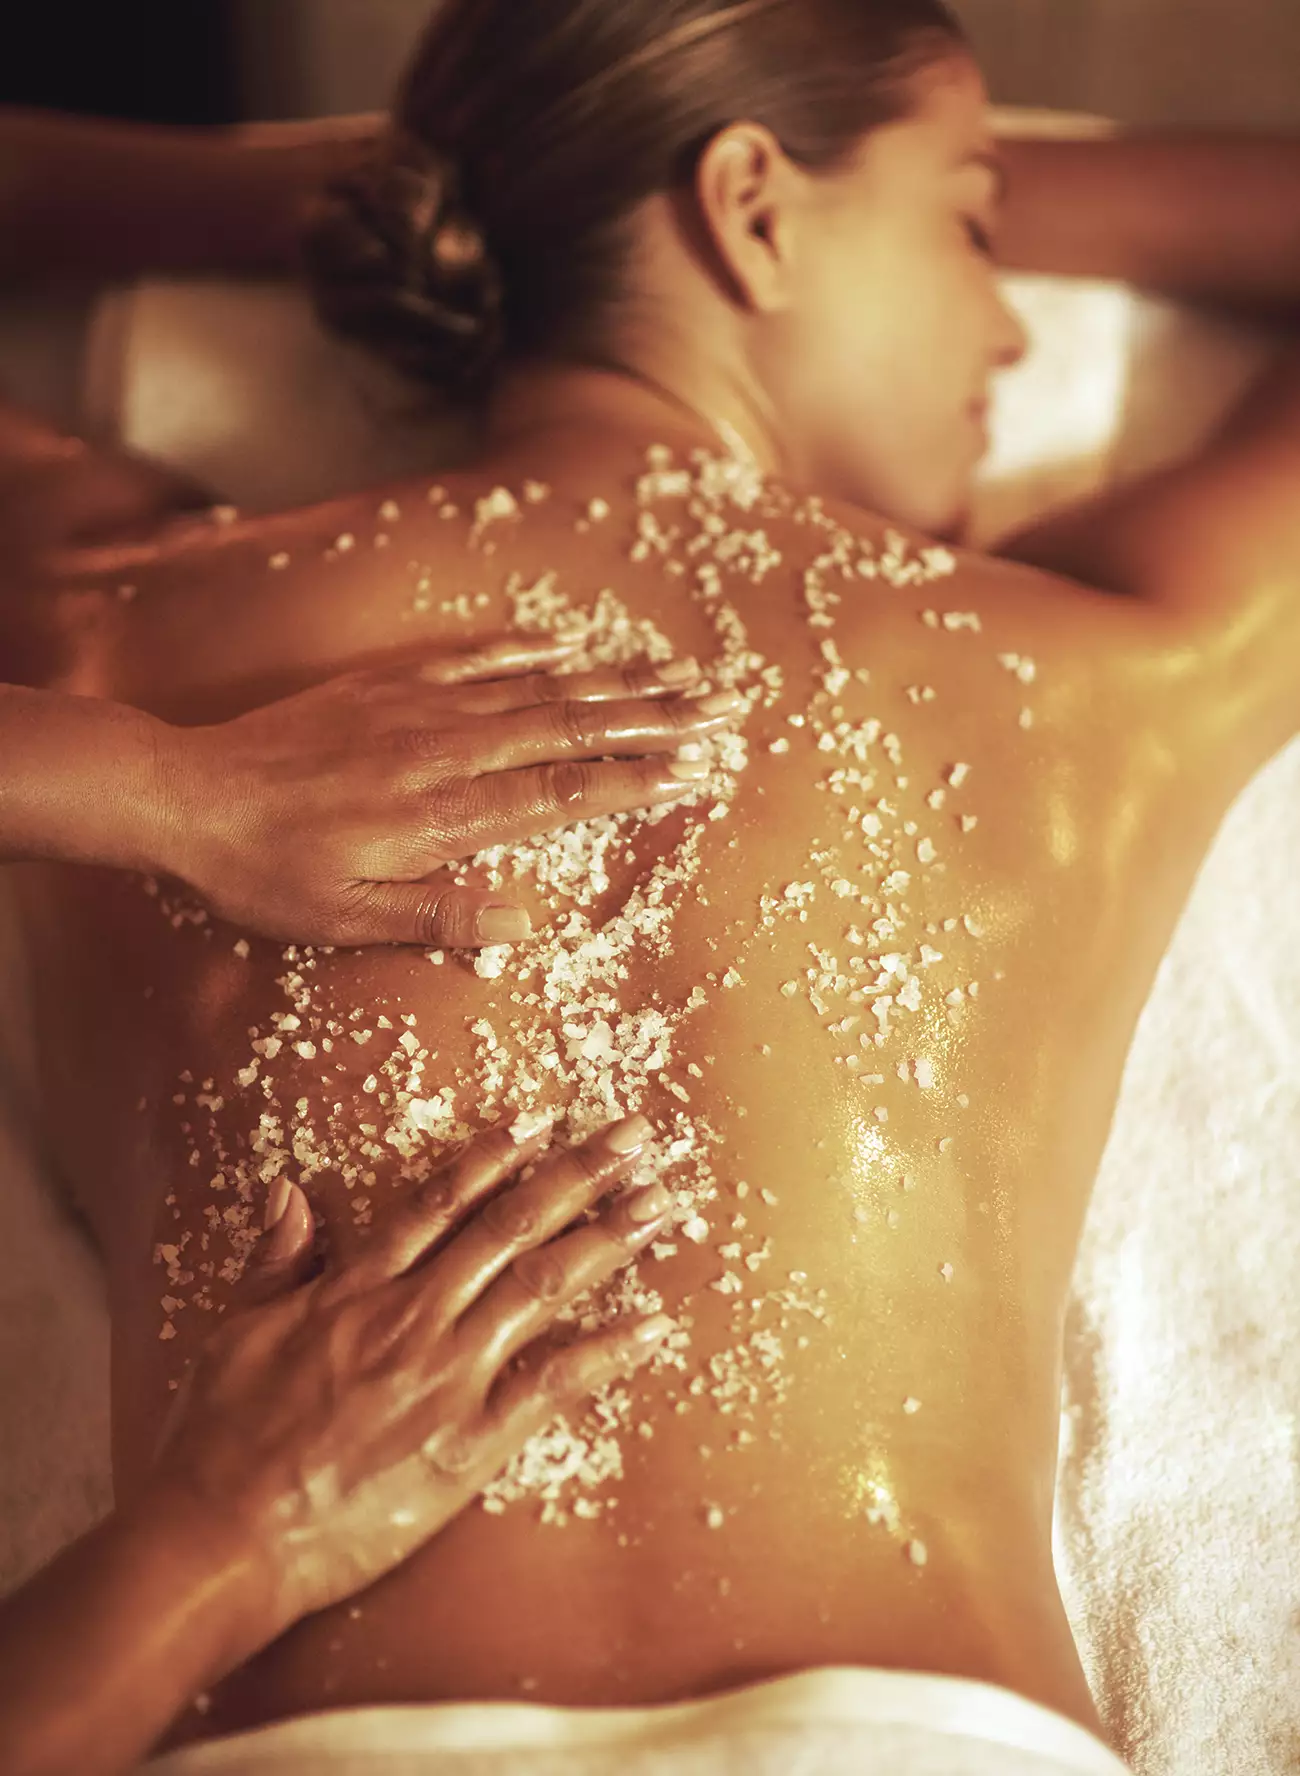 Salt exfoliation scrub massage on back